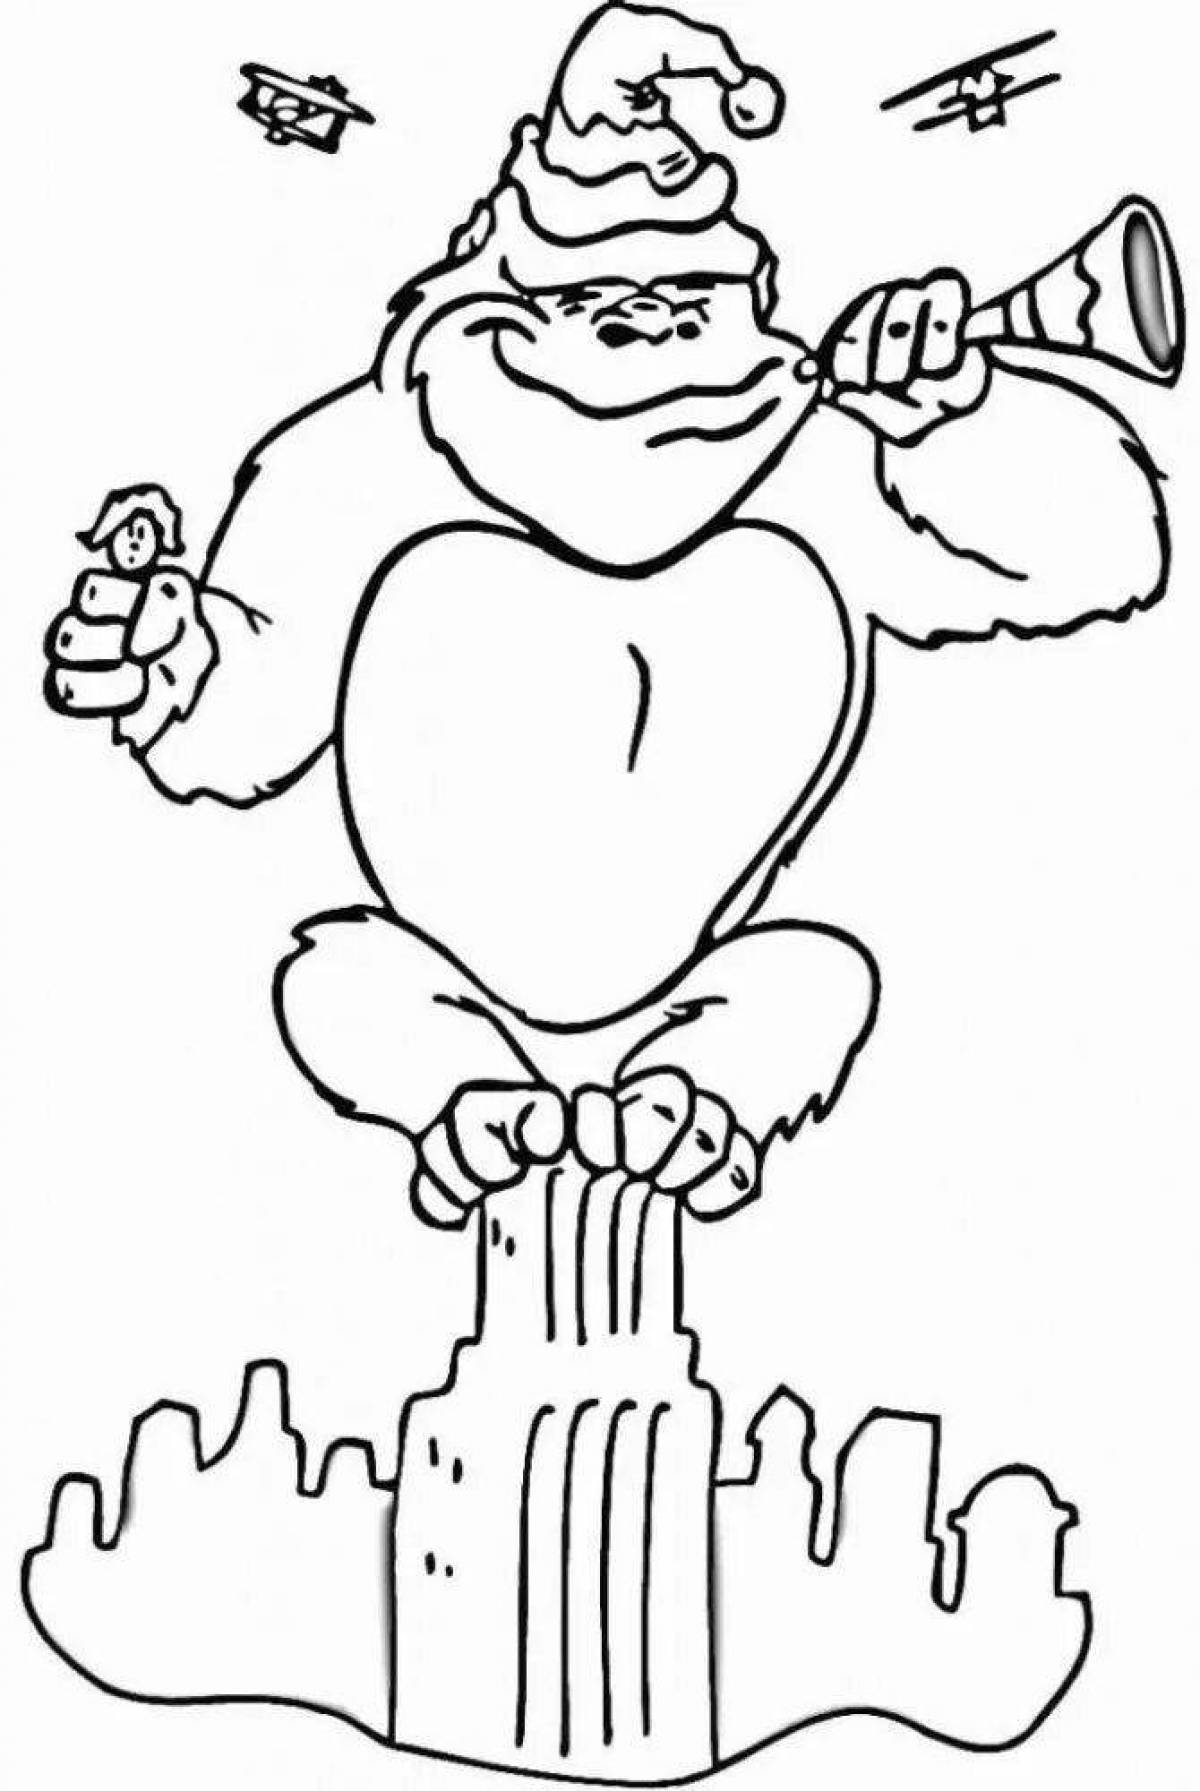 Glowing King Kong coloring page